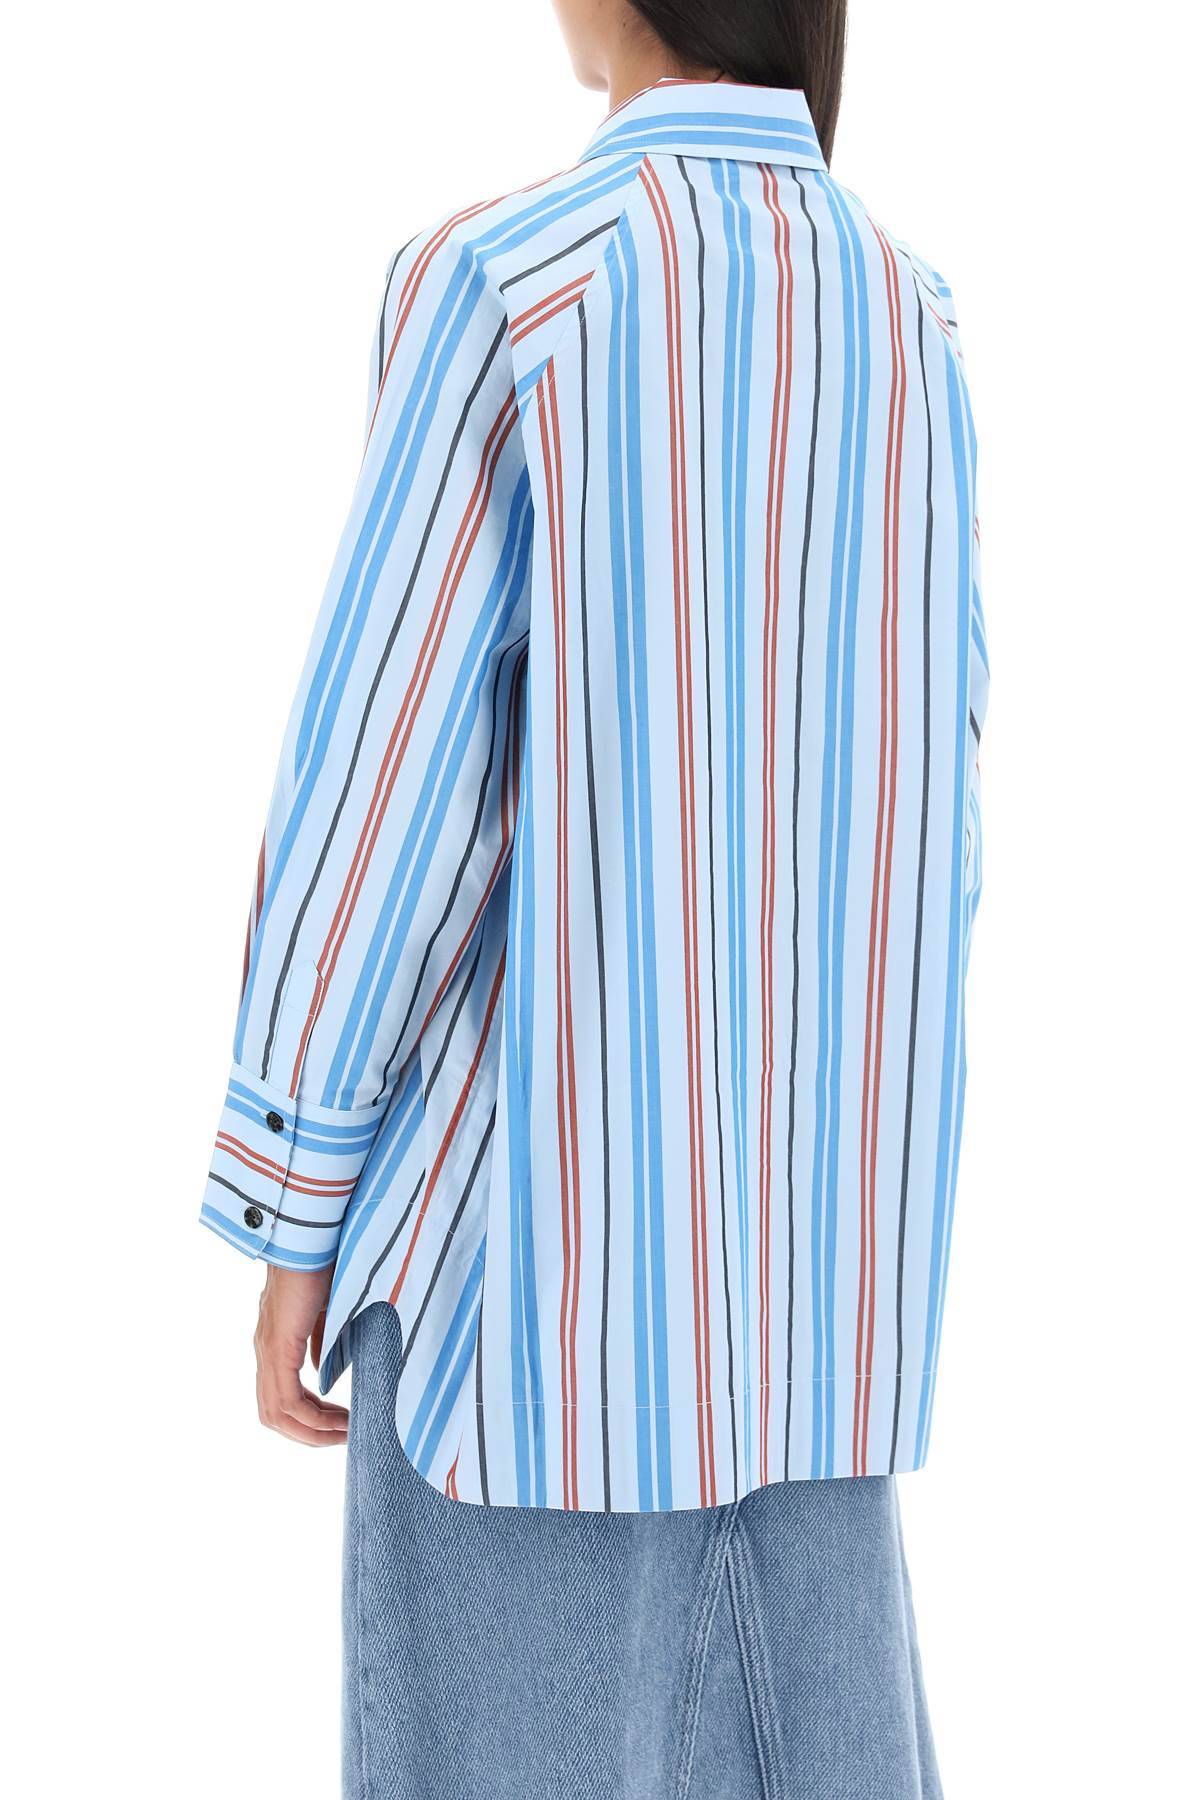 Shop Ganni Oversized Striped Shirt In Light Blue